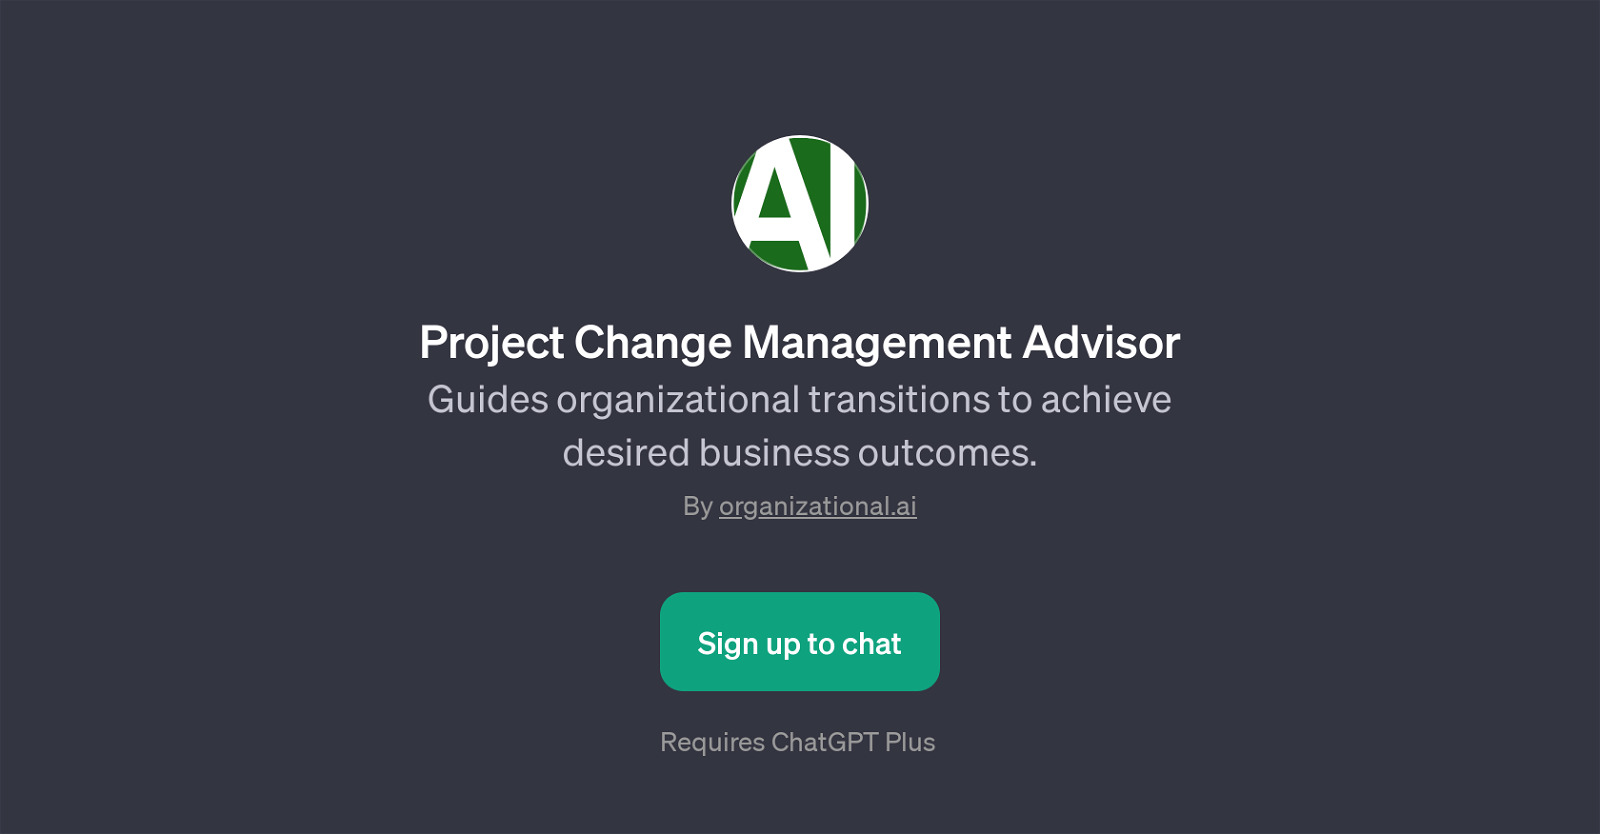 Project Change Management Advisor website